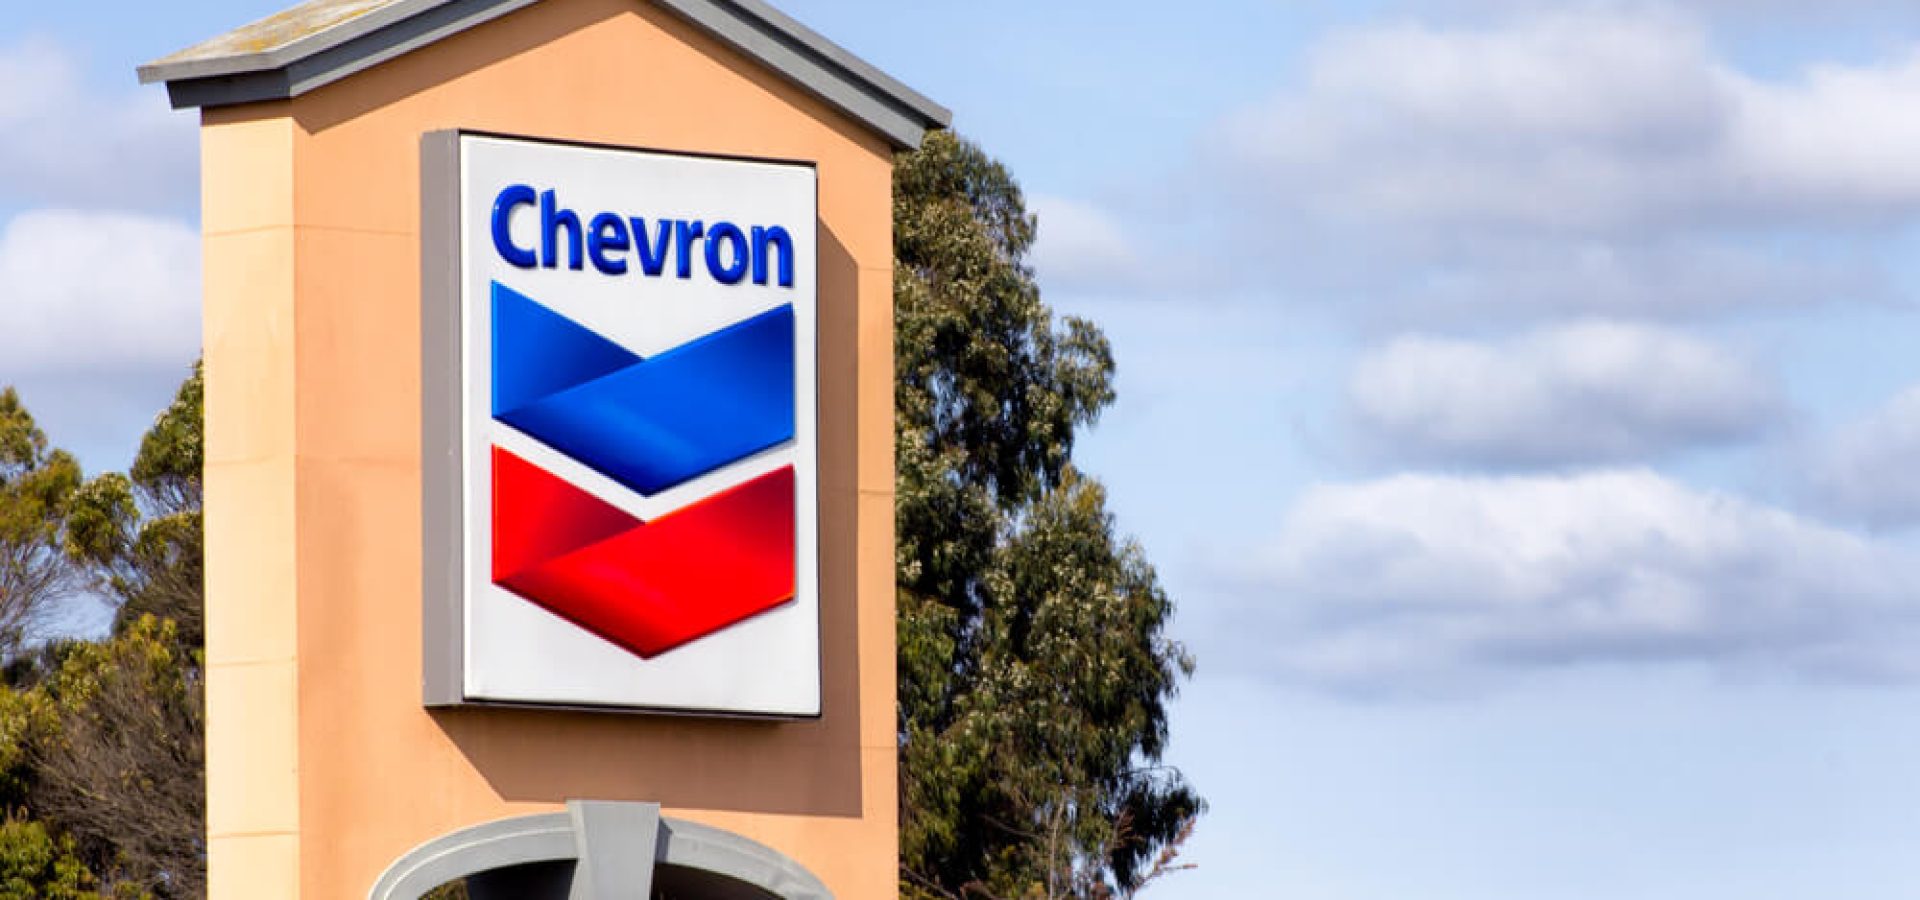 Chevron gas station sign.